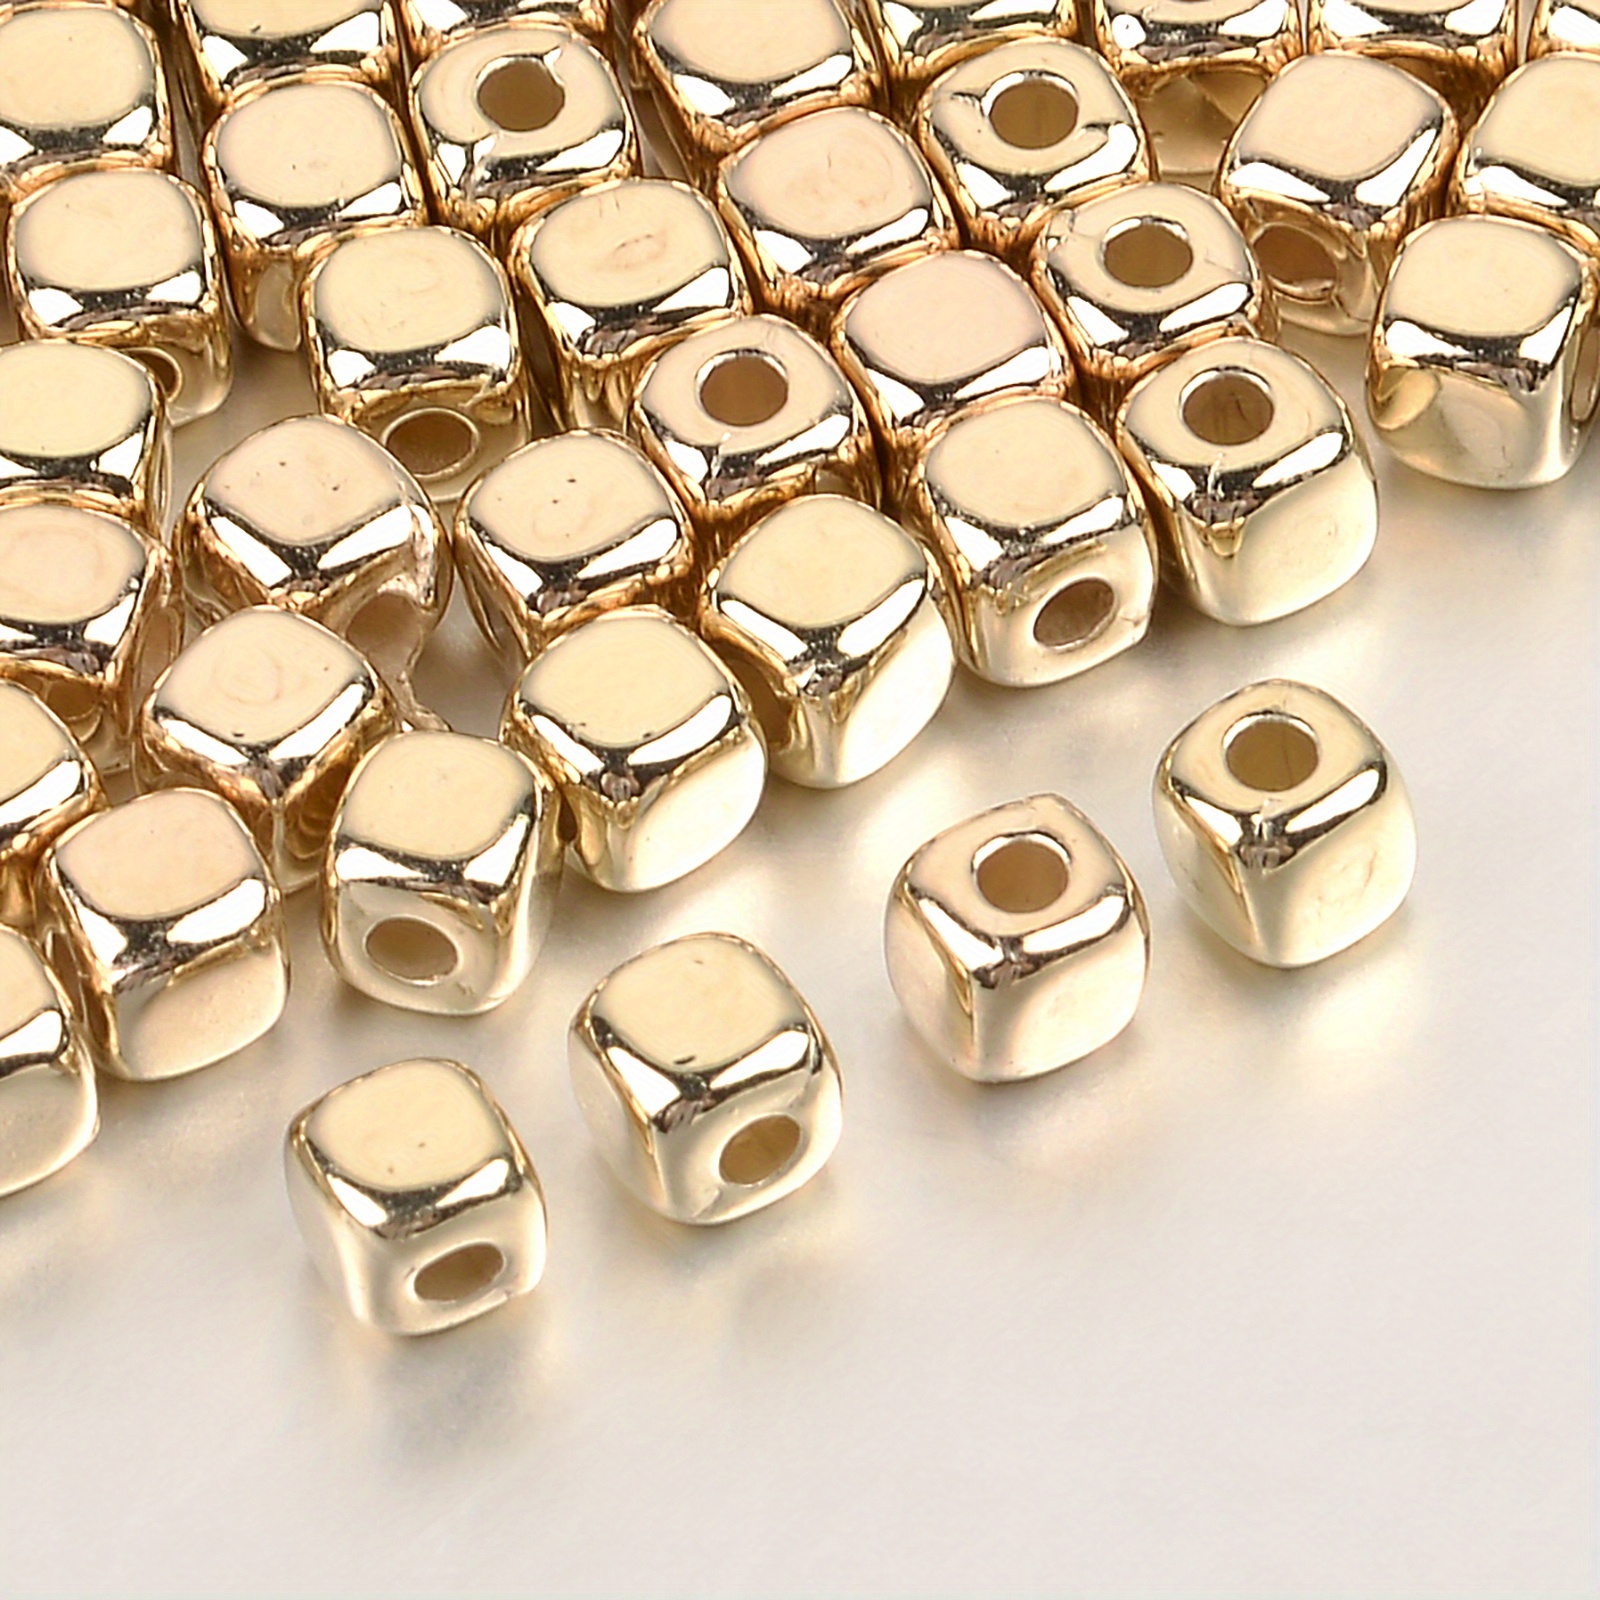 Gold, Silver, Bronze Metal Beads Mix 4mm 100pcs